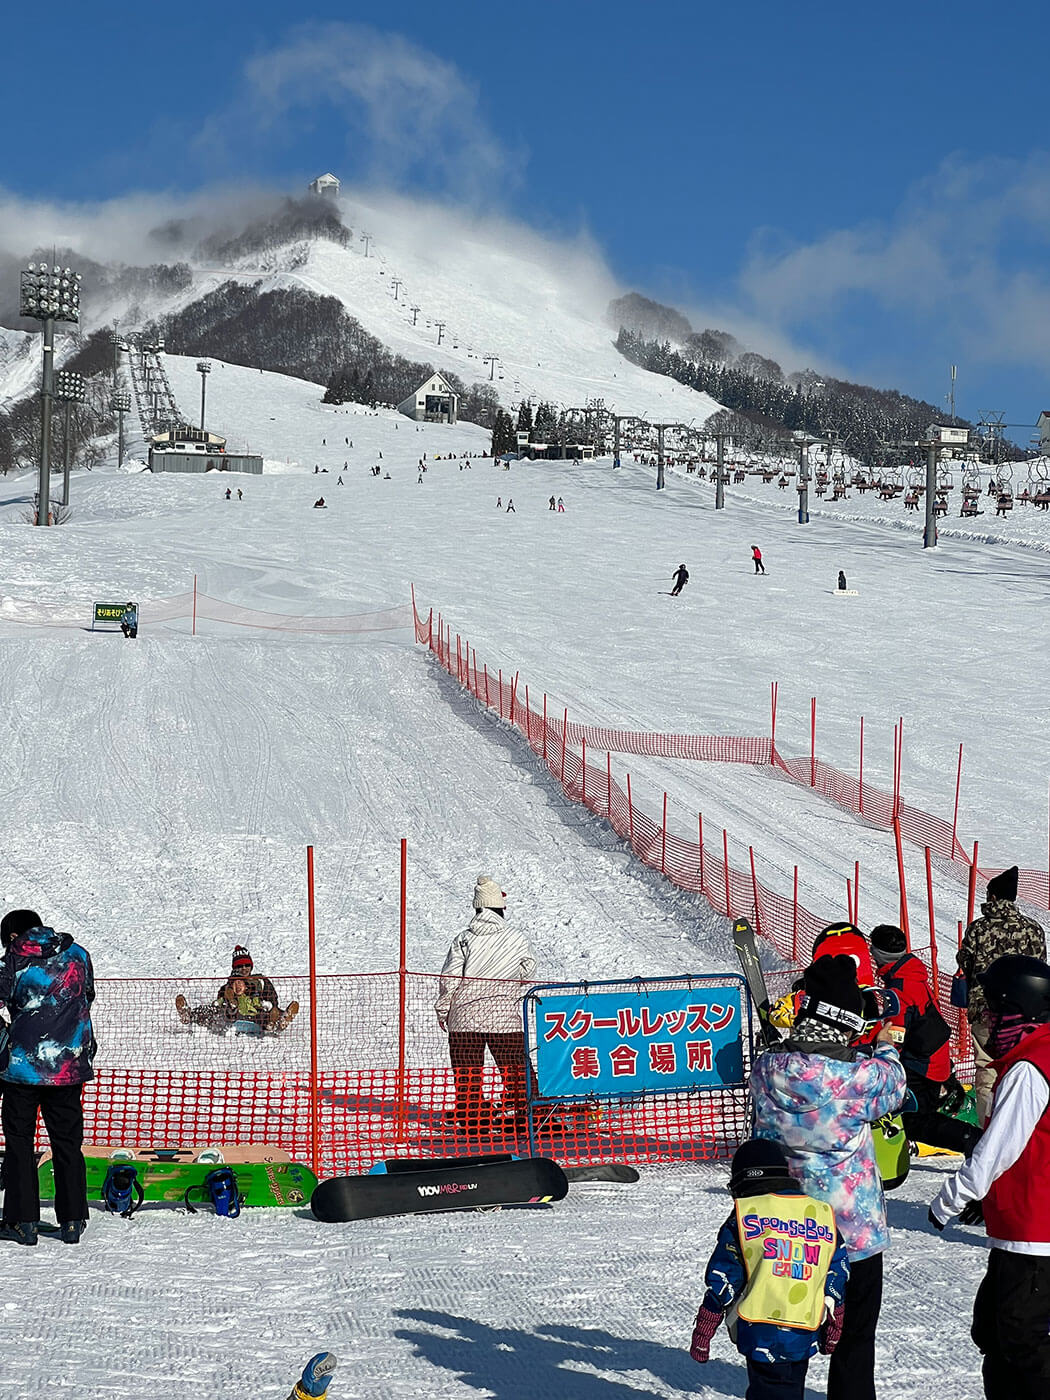 Iwappara Ski Resort near Tokyo